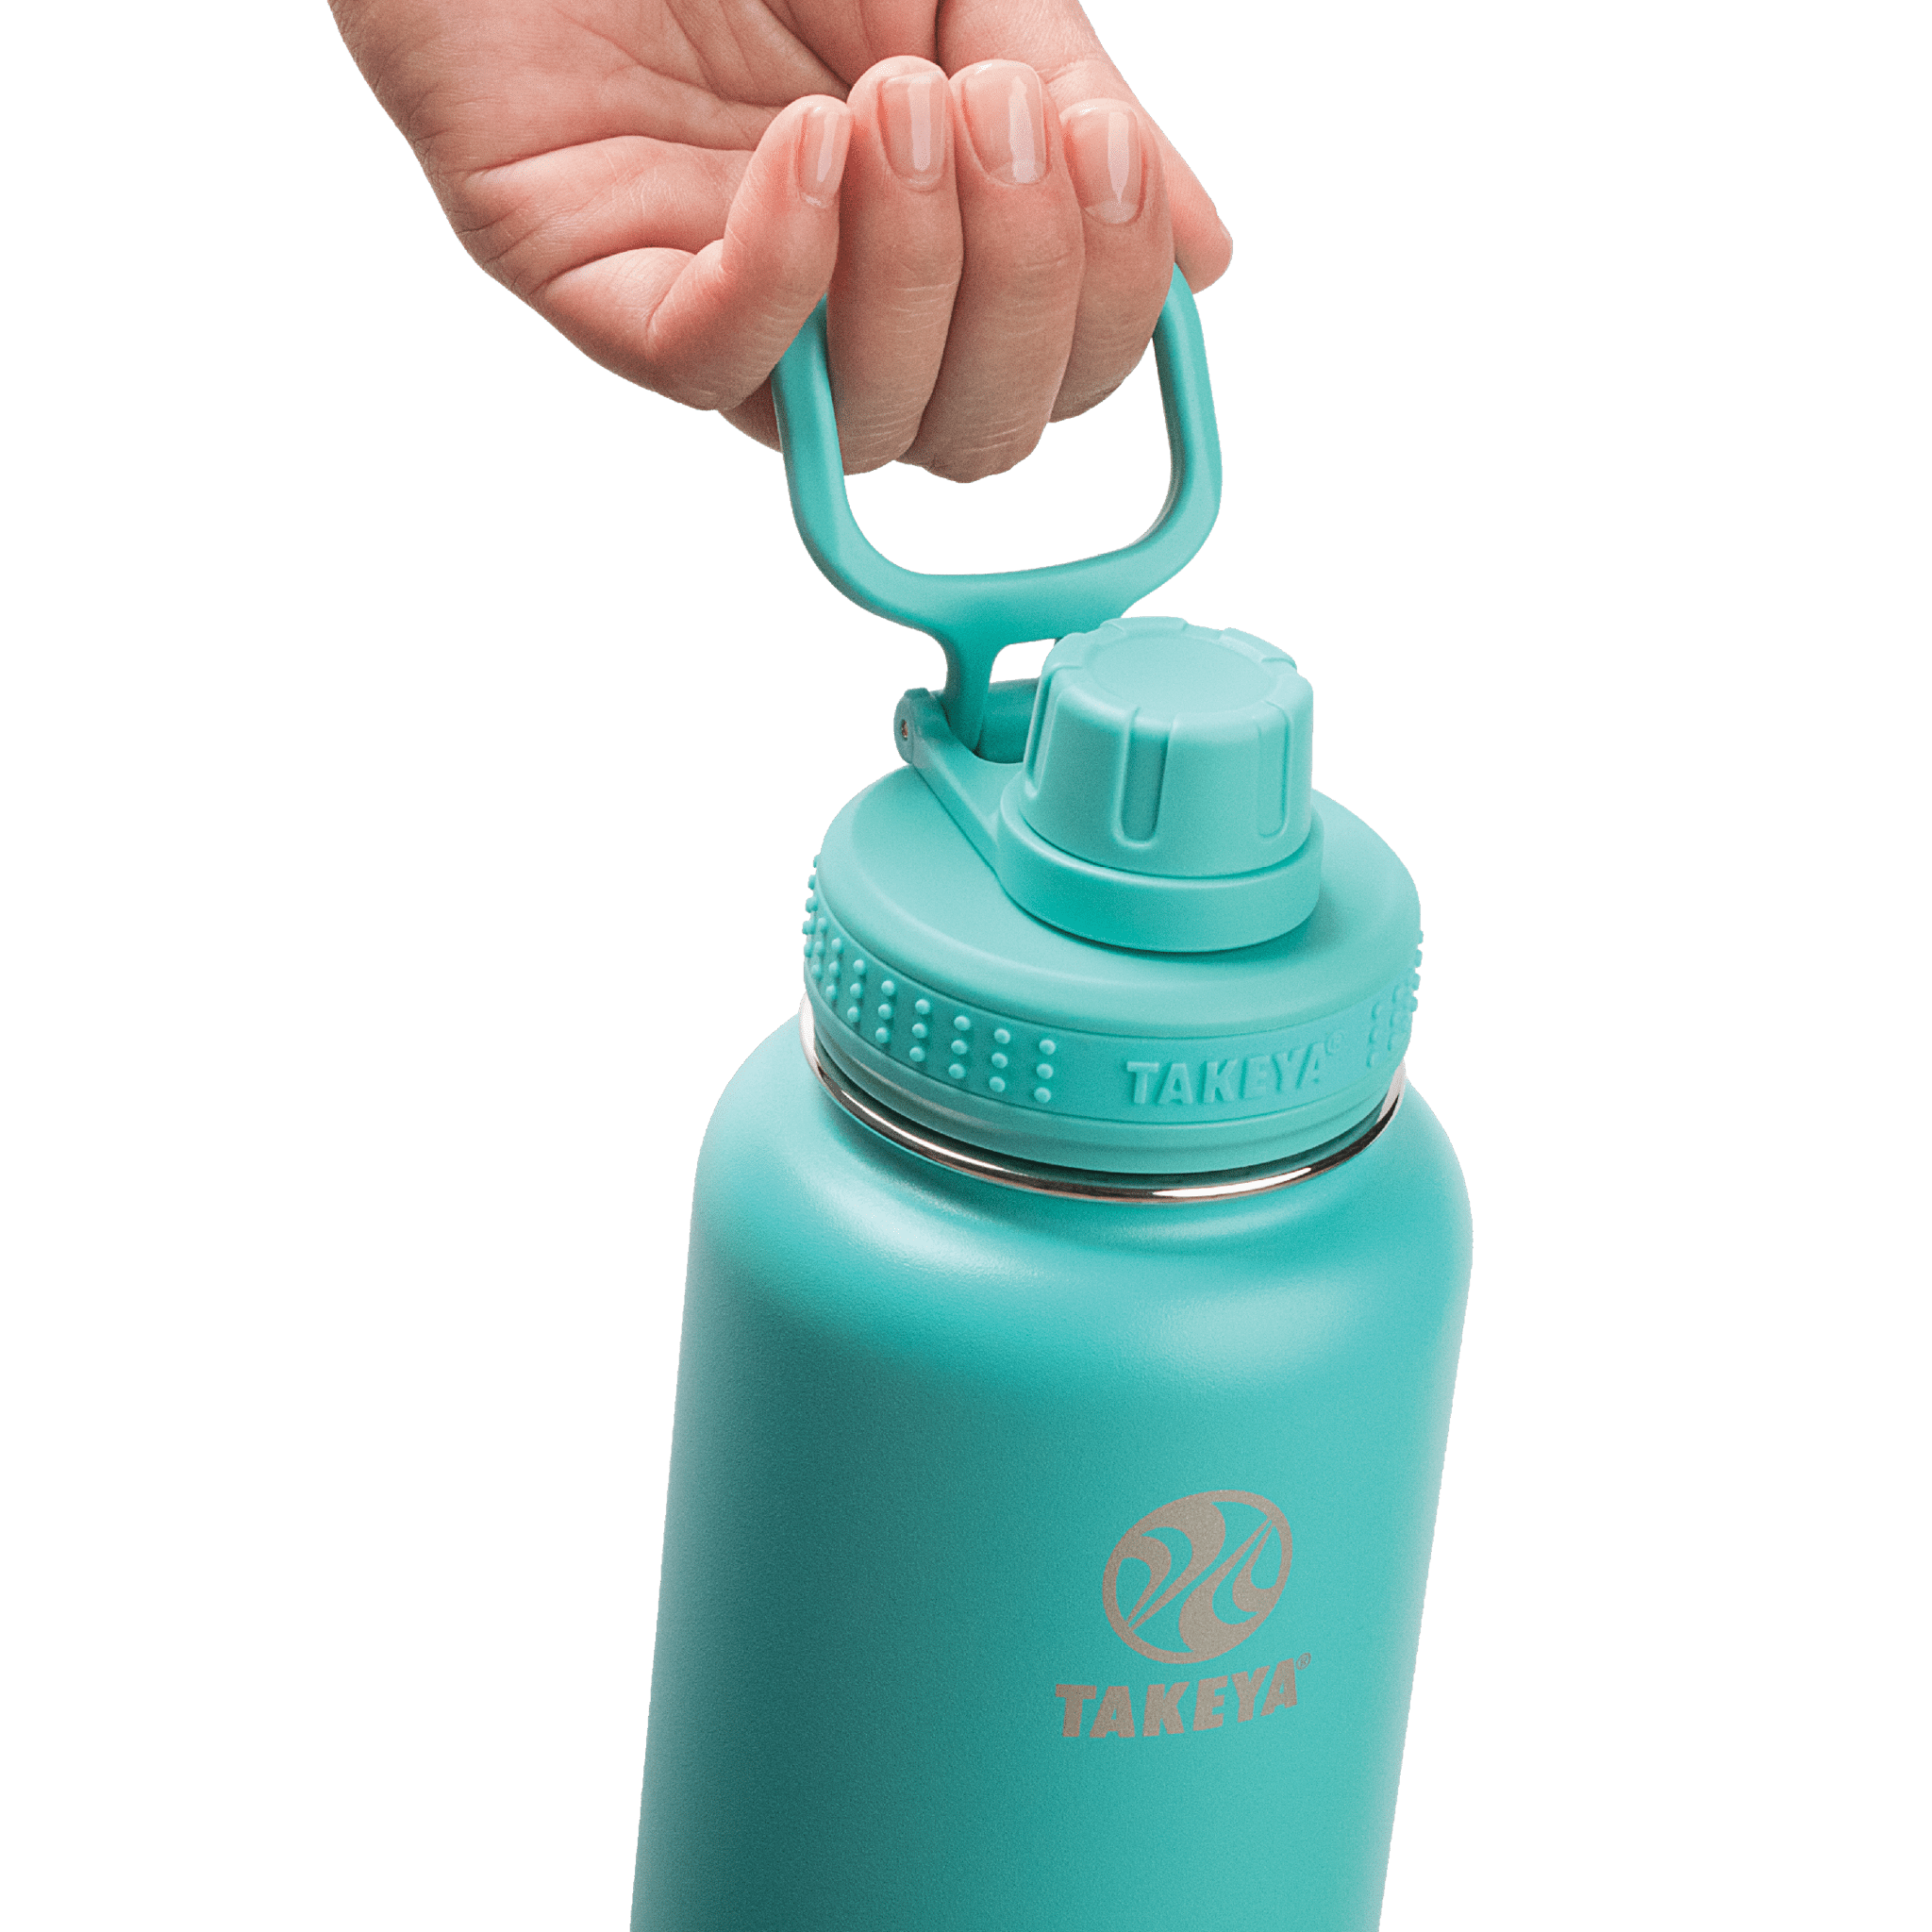 Takeya® Actives Bottle w/ Straw Lid - 24 oz.